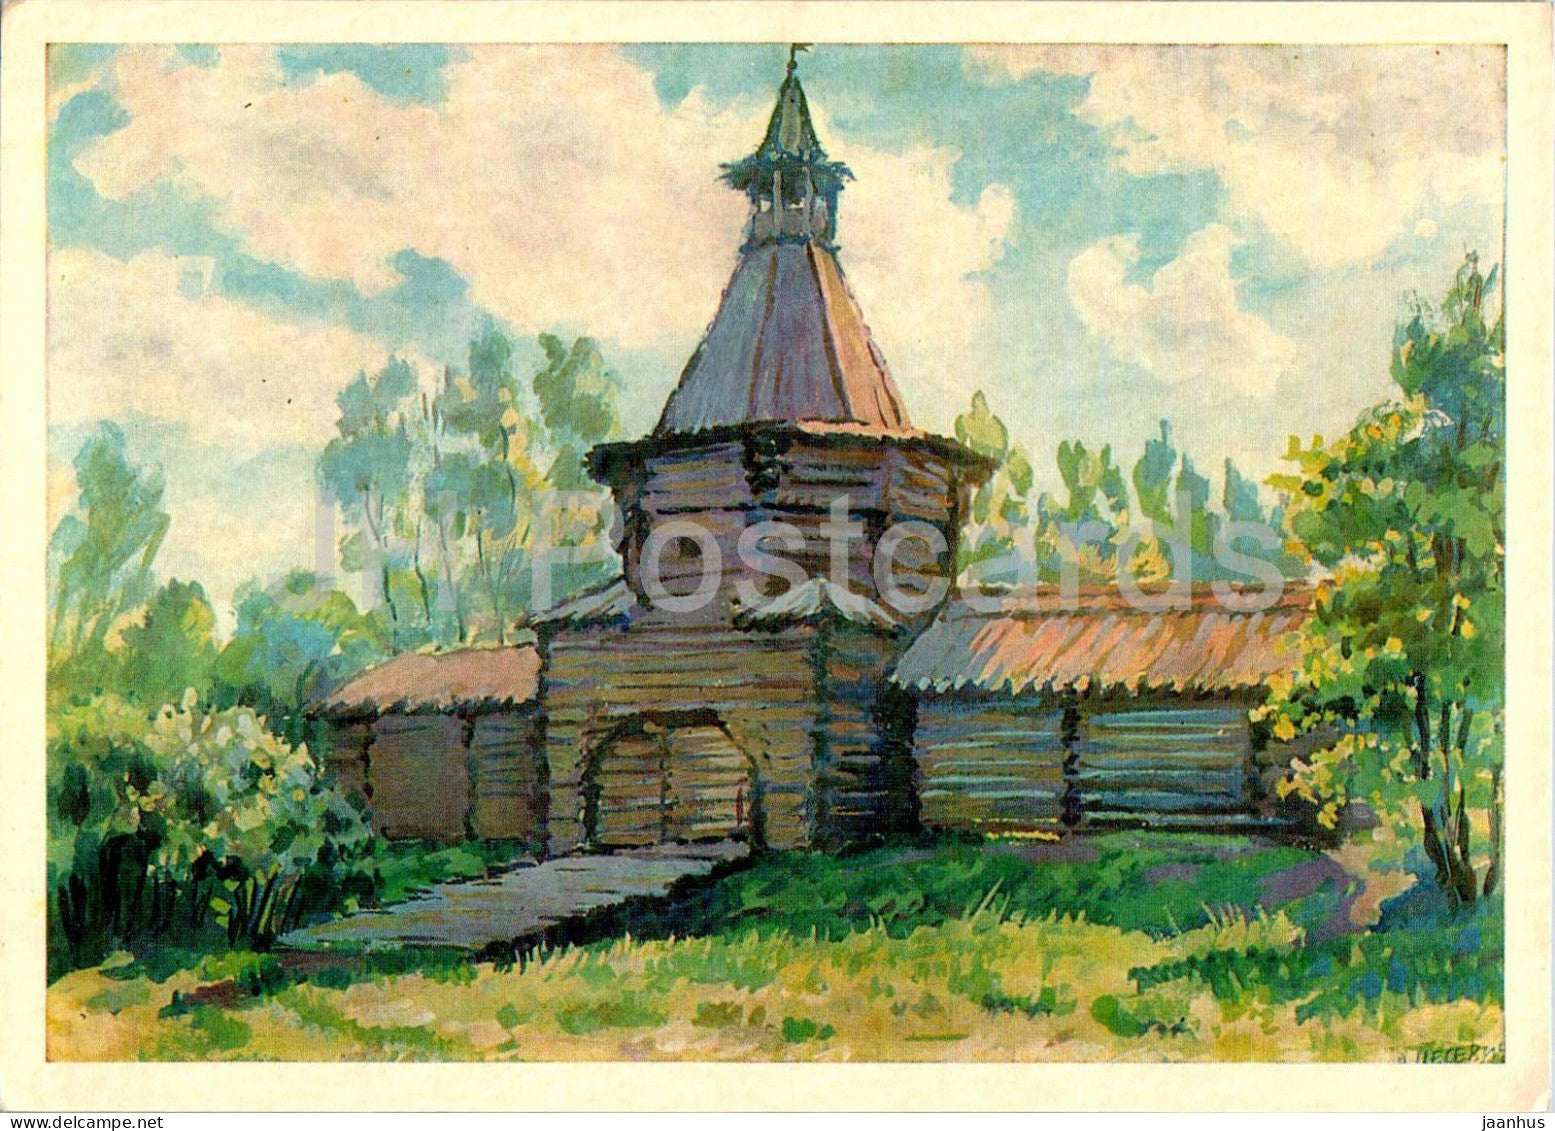 Kolomenskoye - Gate Tower of the Nikolo Karelsky Monastery - illustration by A. Tsesevich - 1972 - Russia USSR - unused - JH Postcards